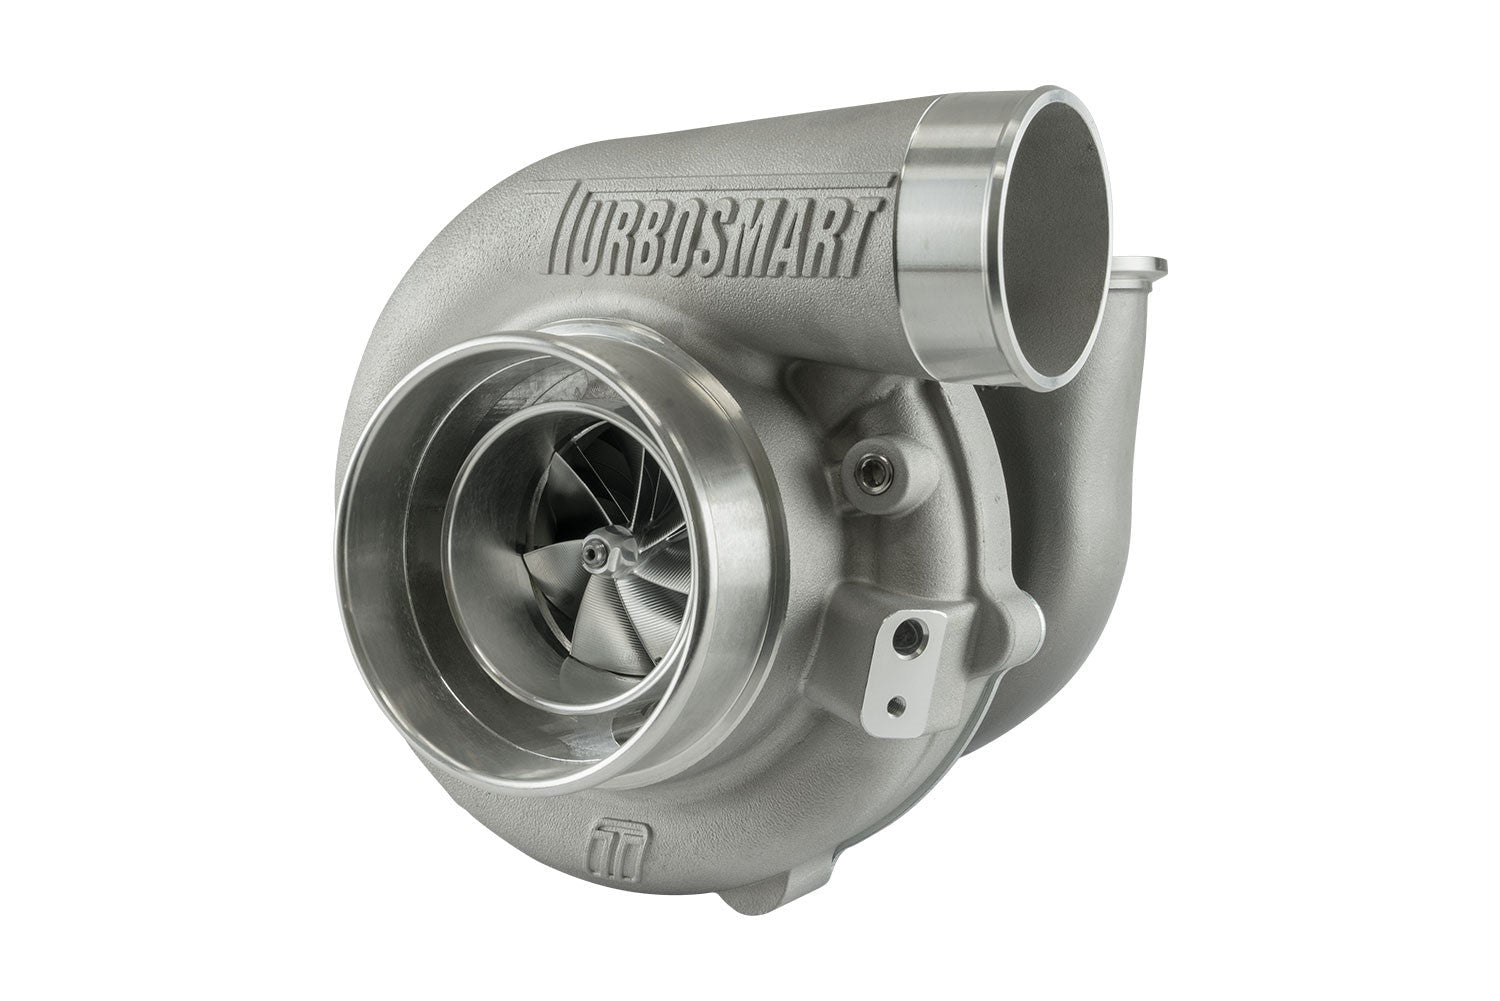 TS-1 Performance Turbocharger 5862 V-Band 0.82AR Externally Wastegated